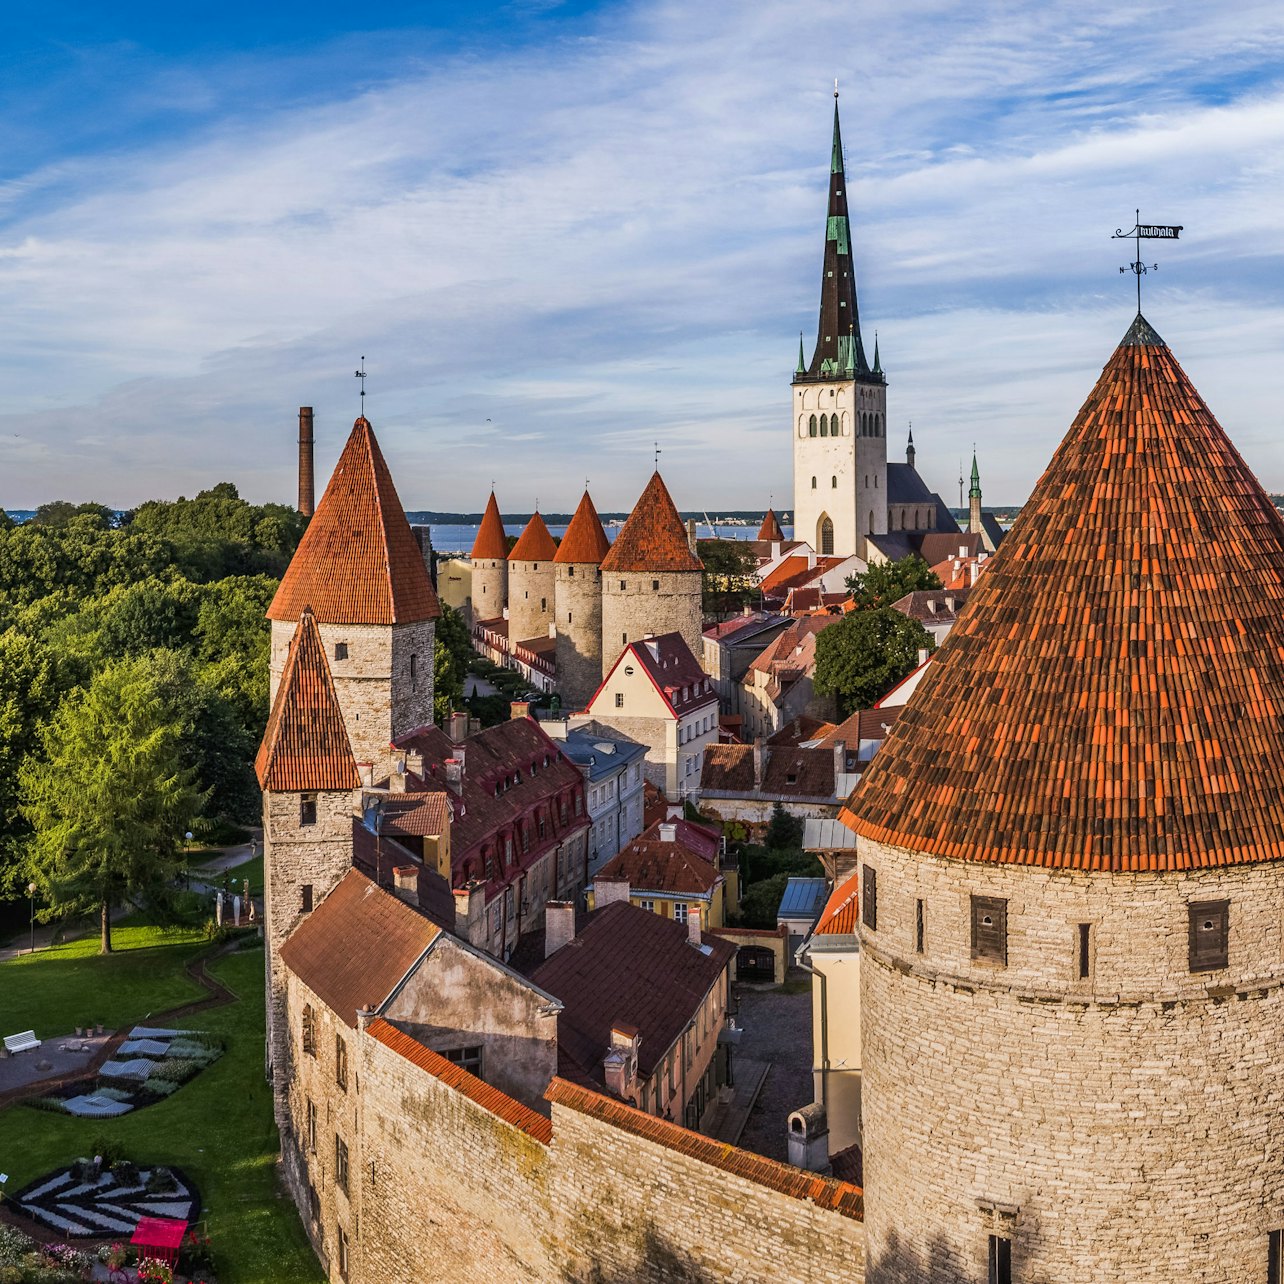 Tallinn Card - Accommodations in Tallinn